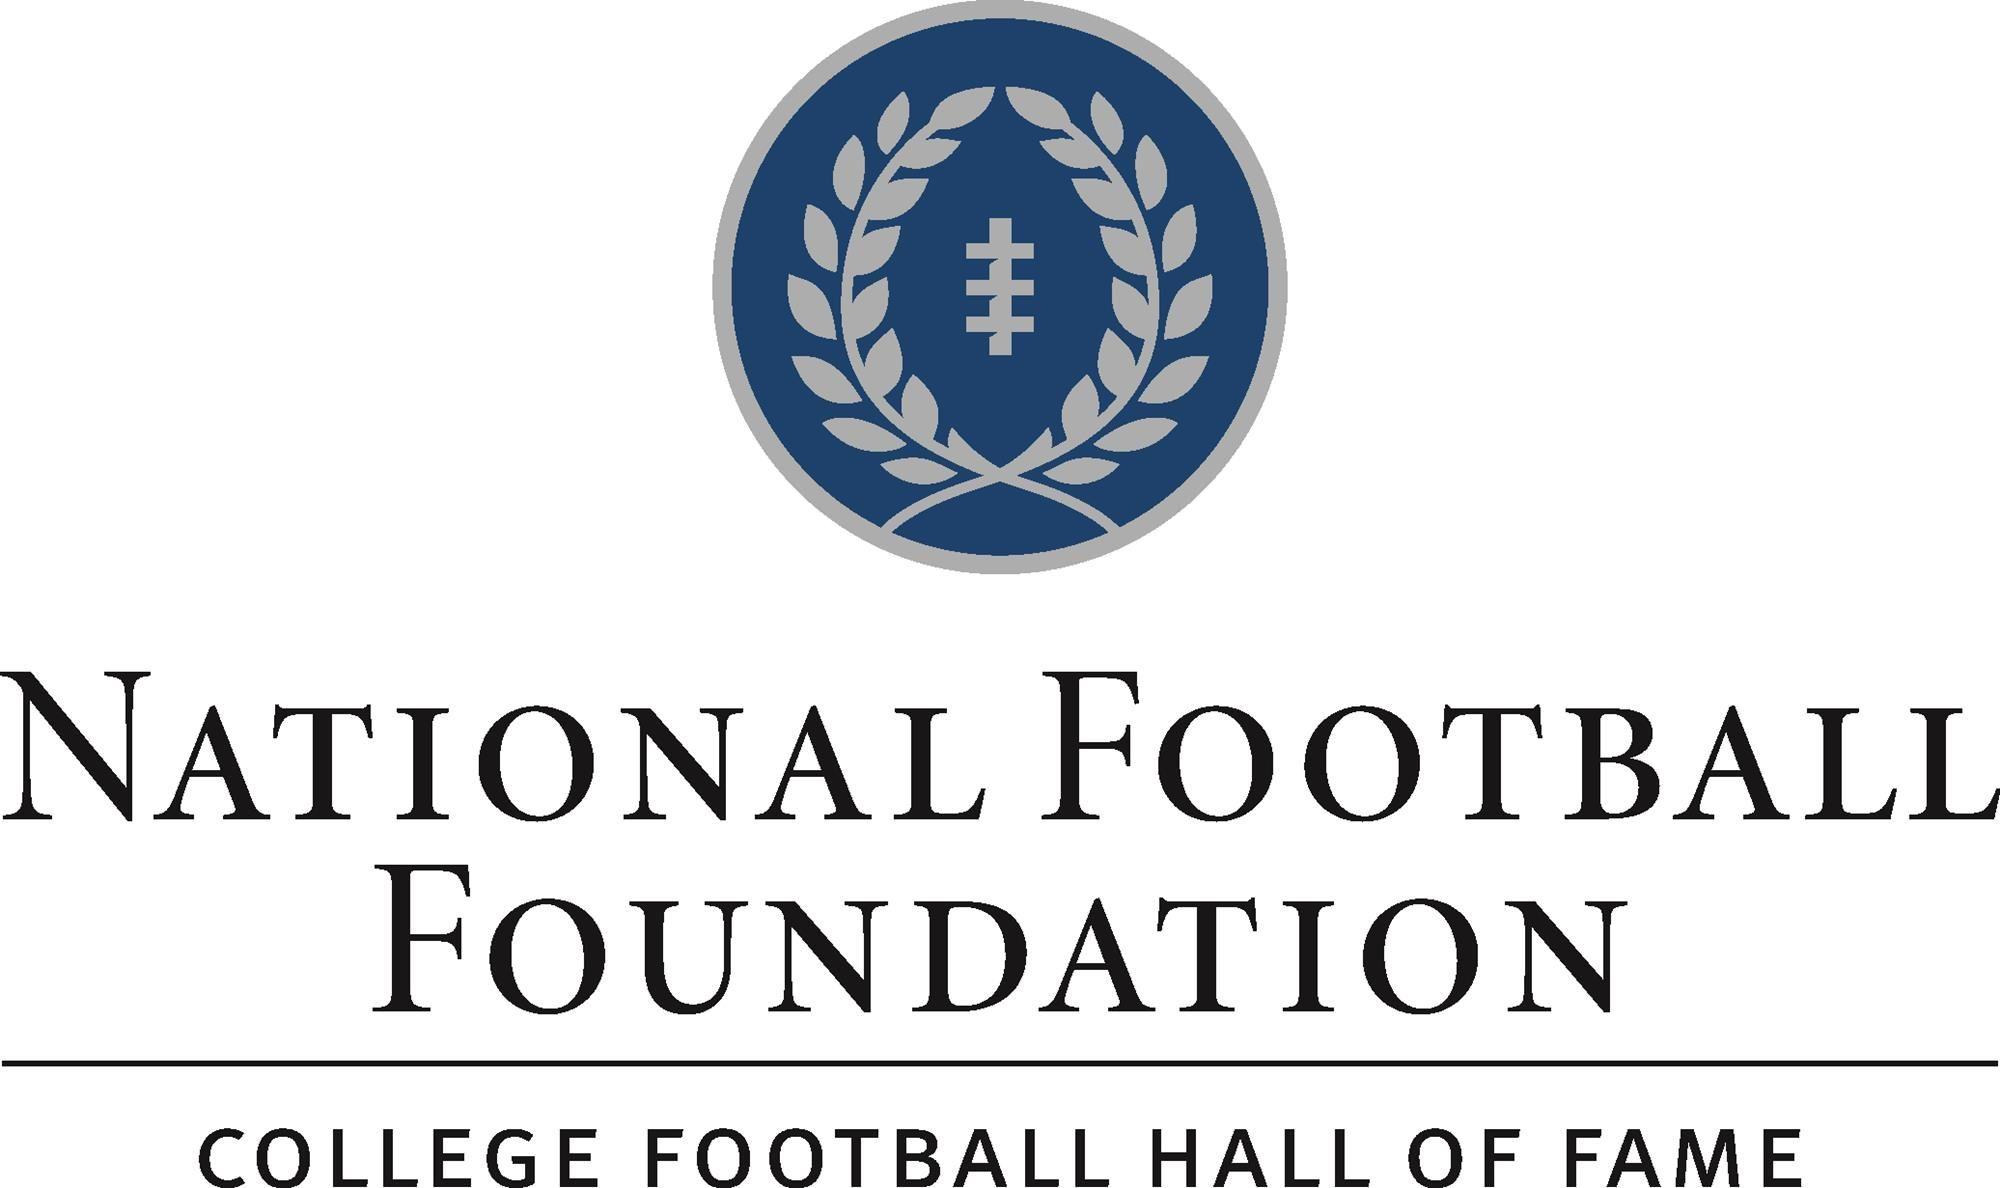 Foundation Logo - National Football Foundation Logos - National Football Foundation